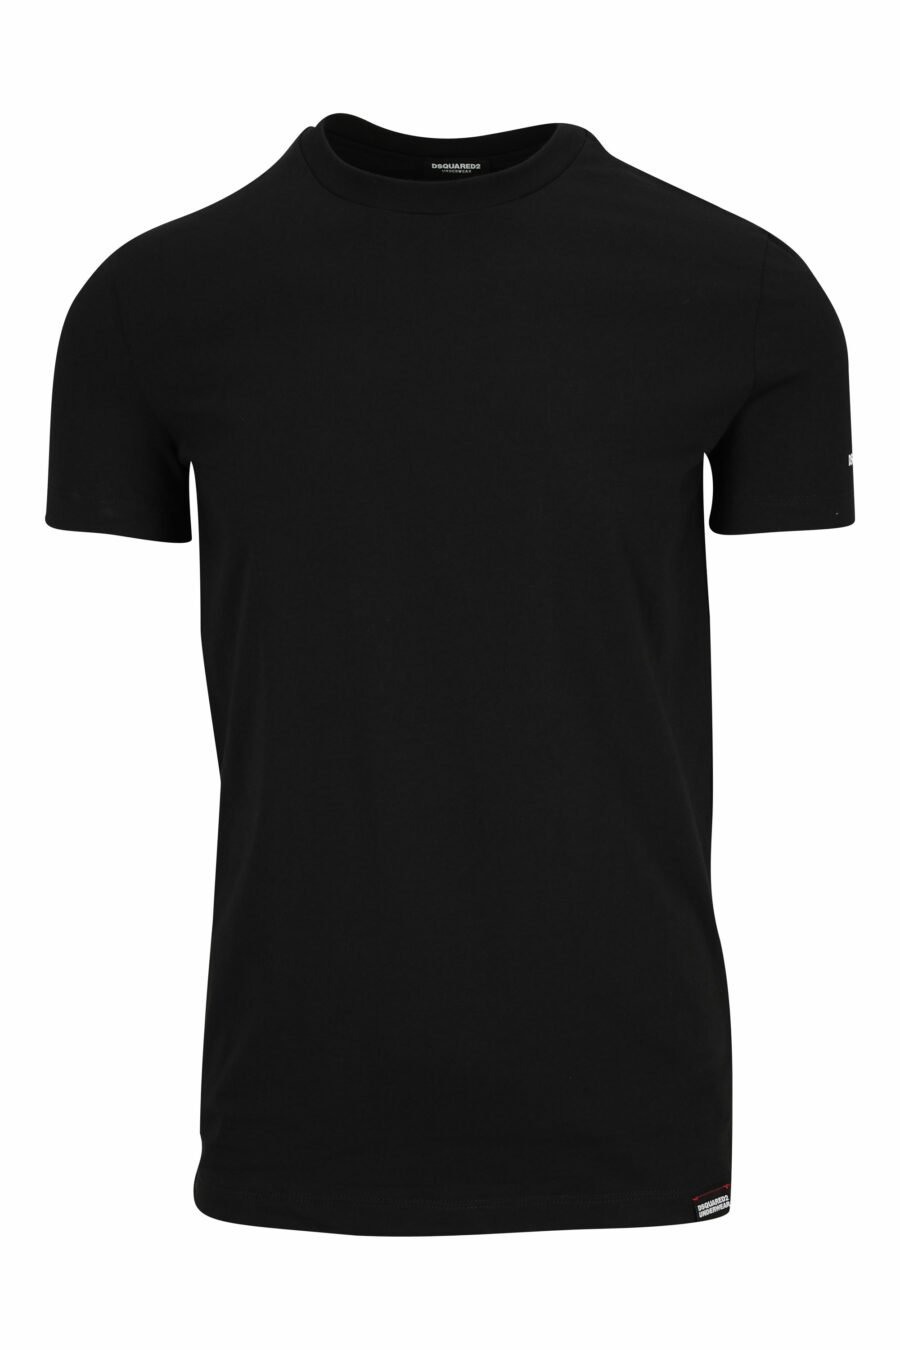 Black T-shirt with white underwear minilogue - 8032674811509